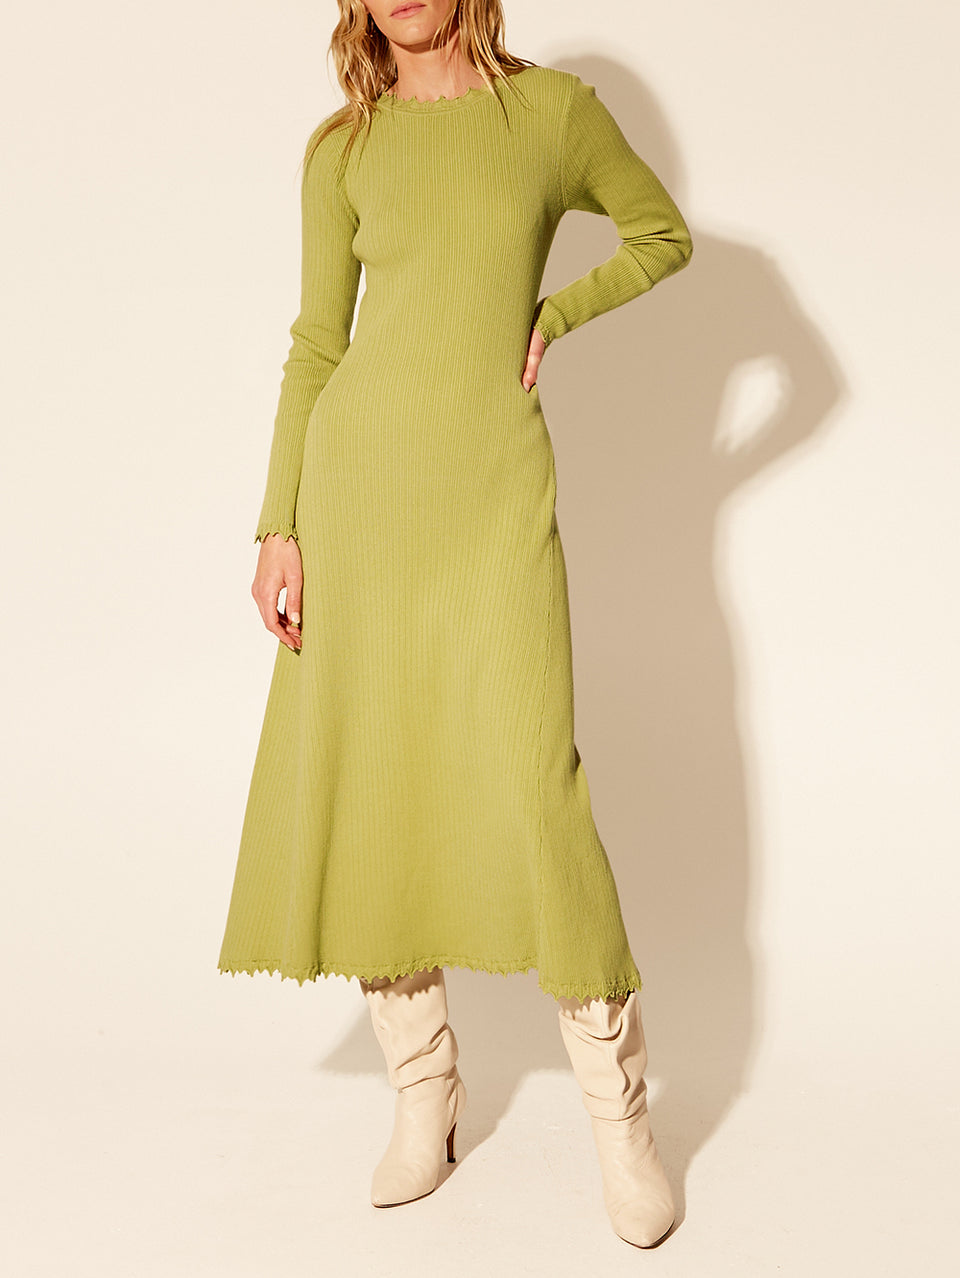 Model wearing KIVARI Diana Knit Dress